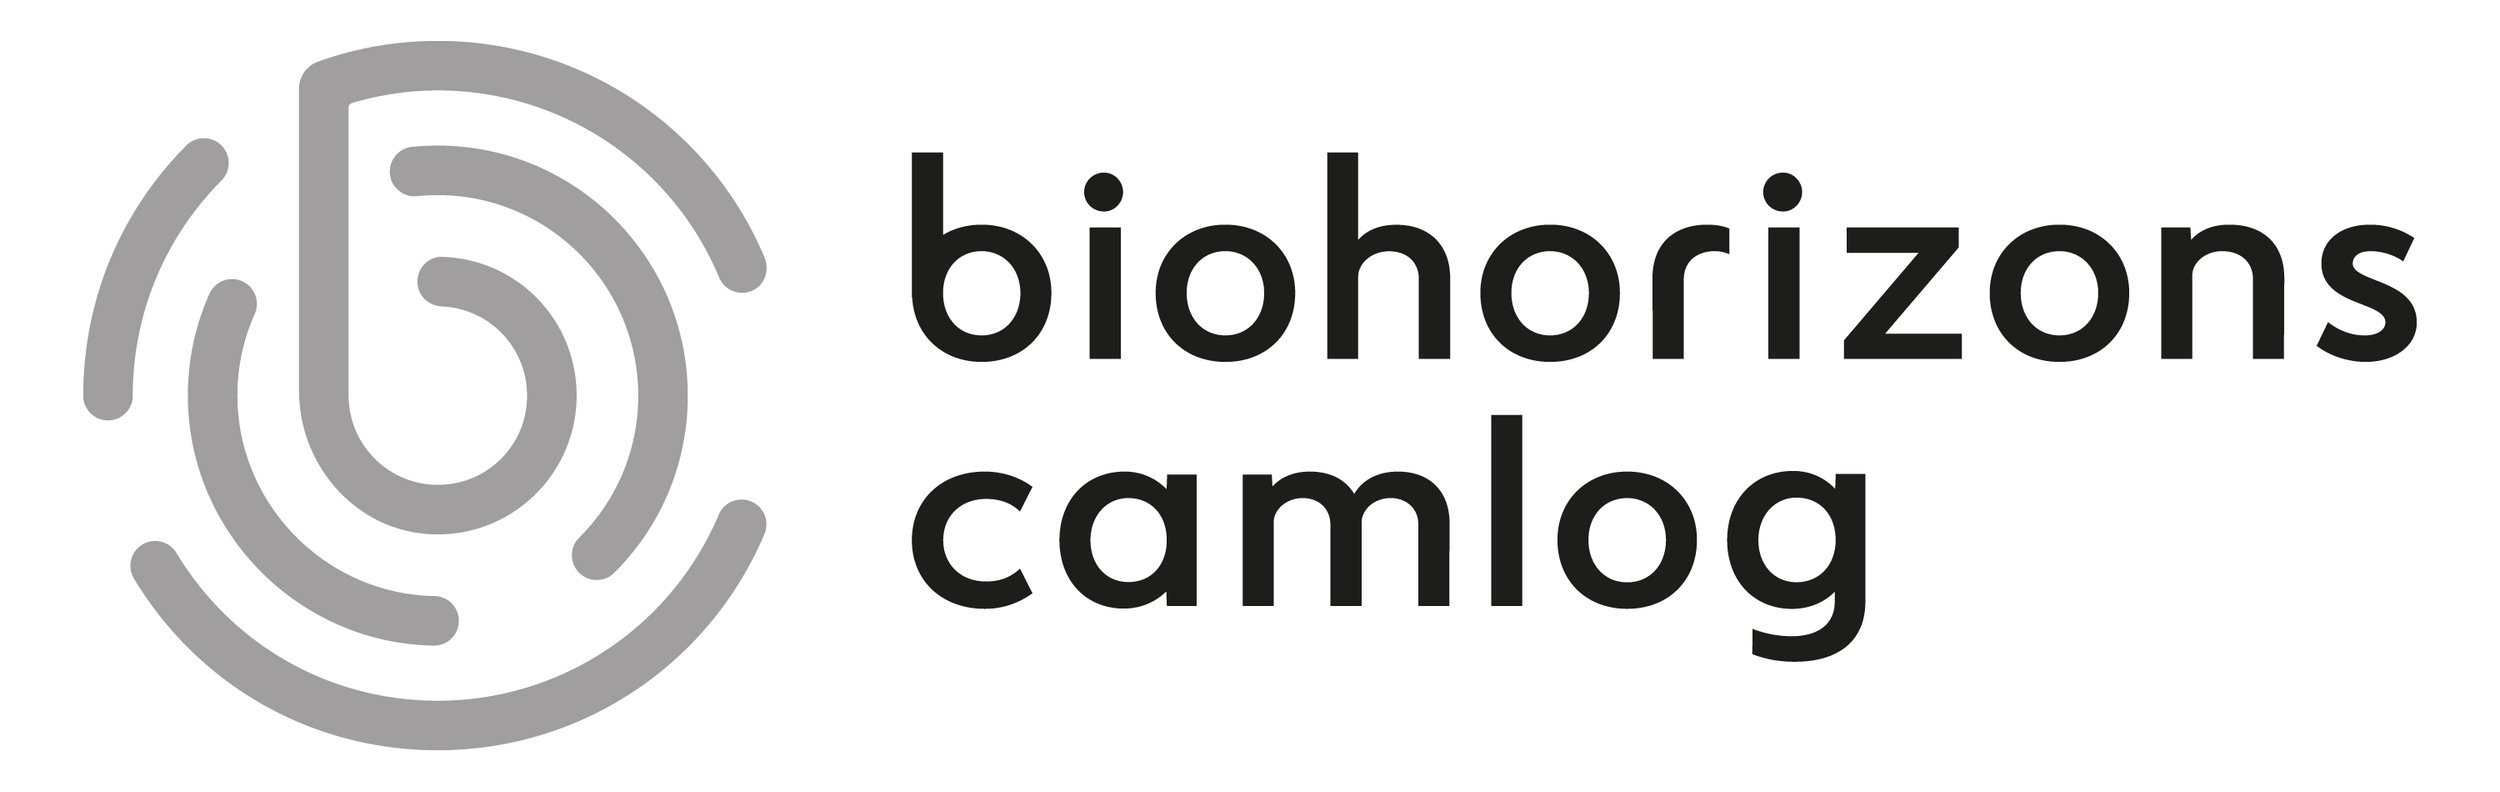 Camlog_Biohorizons_Logo.jpg